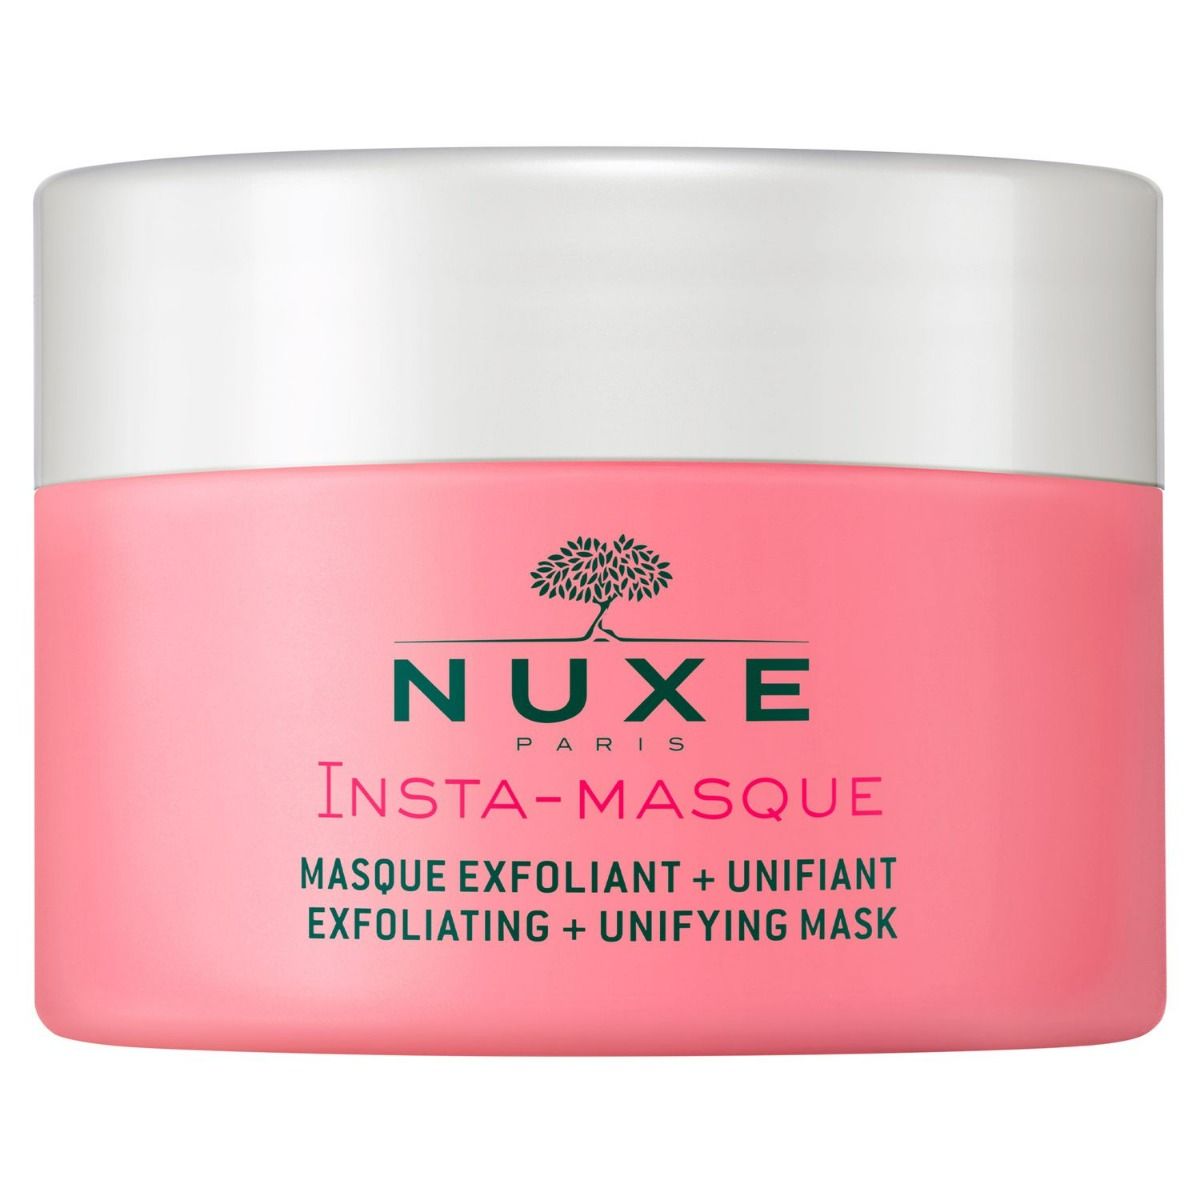 Nuxe Insta-Masque Exfoliant + Unifiant медицинская маска, 50 ml nuxe очищающая разглаживающая маска для лица masque purifiant lissant insta masque 50 мл nuxe insta masque